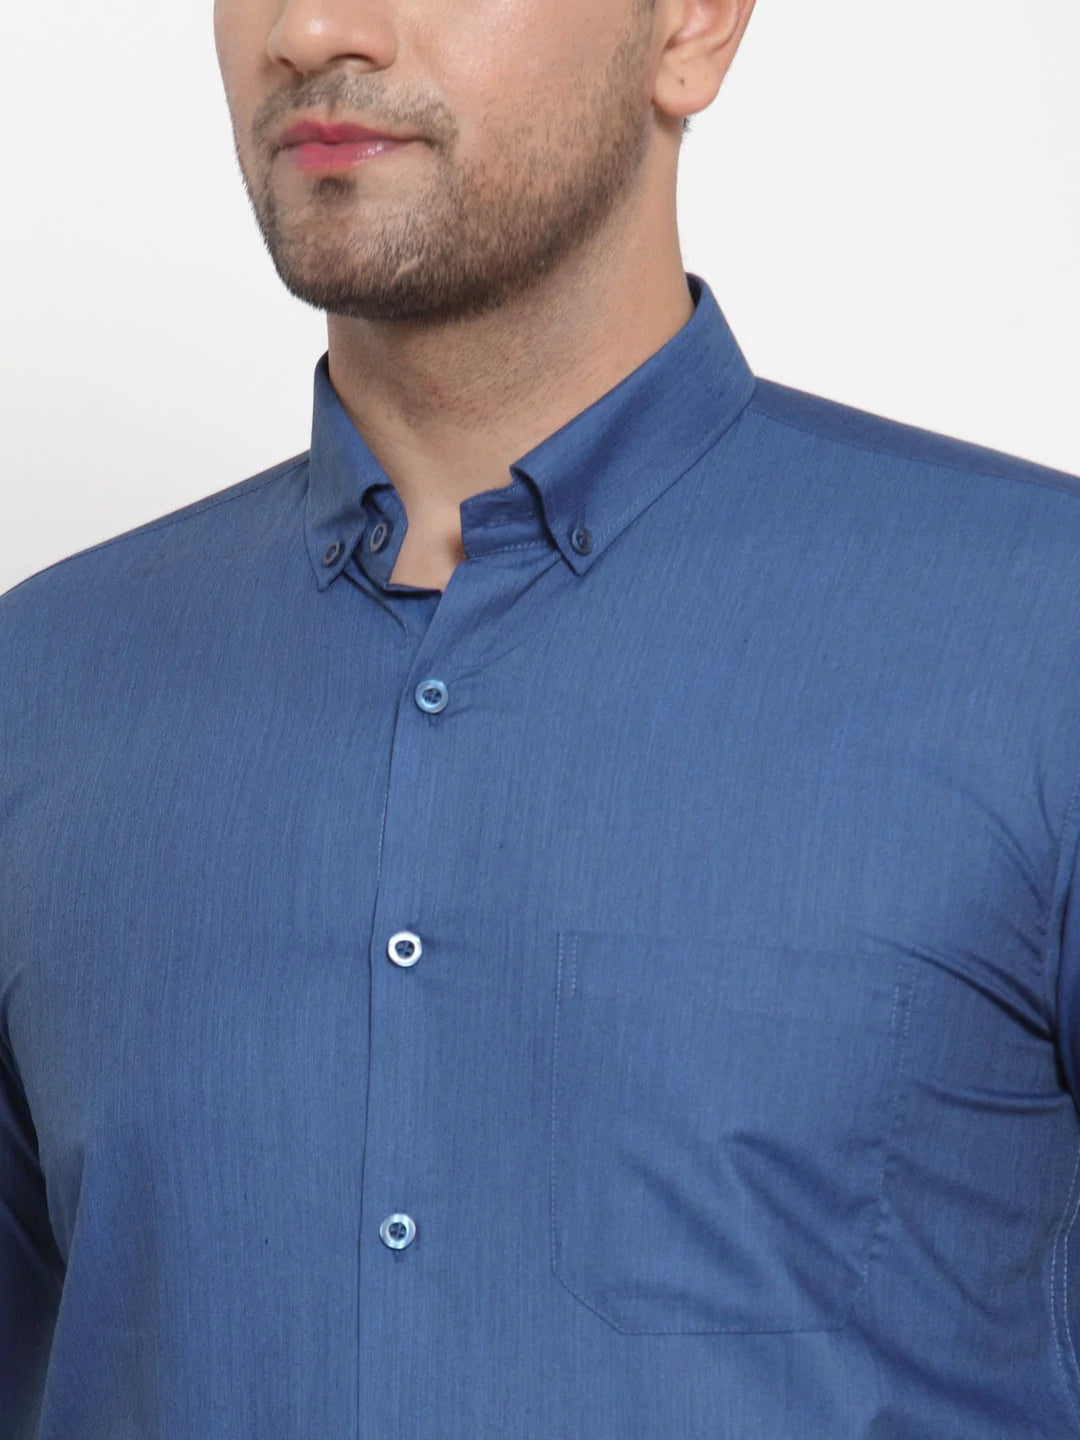 Jainish Blue Men's Cotton Solid Button Down Formal Shirts ( SF 713Peacock )